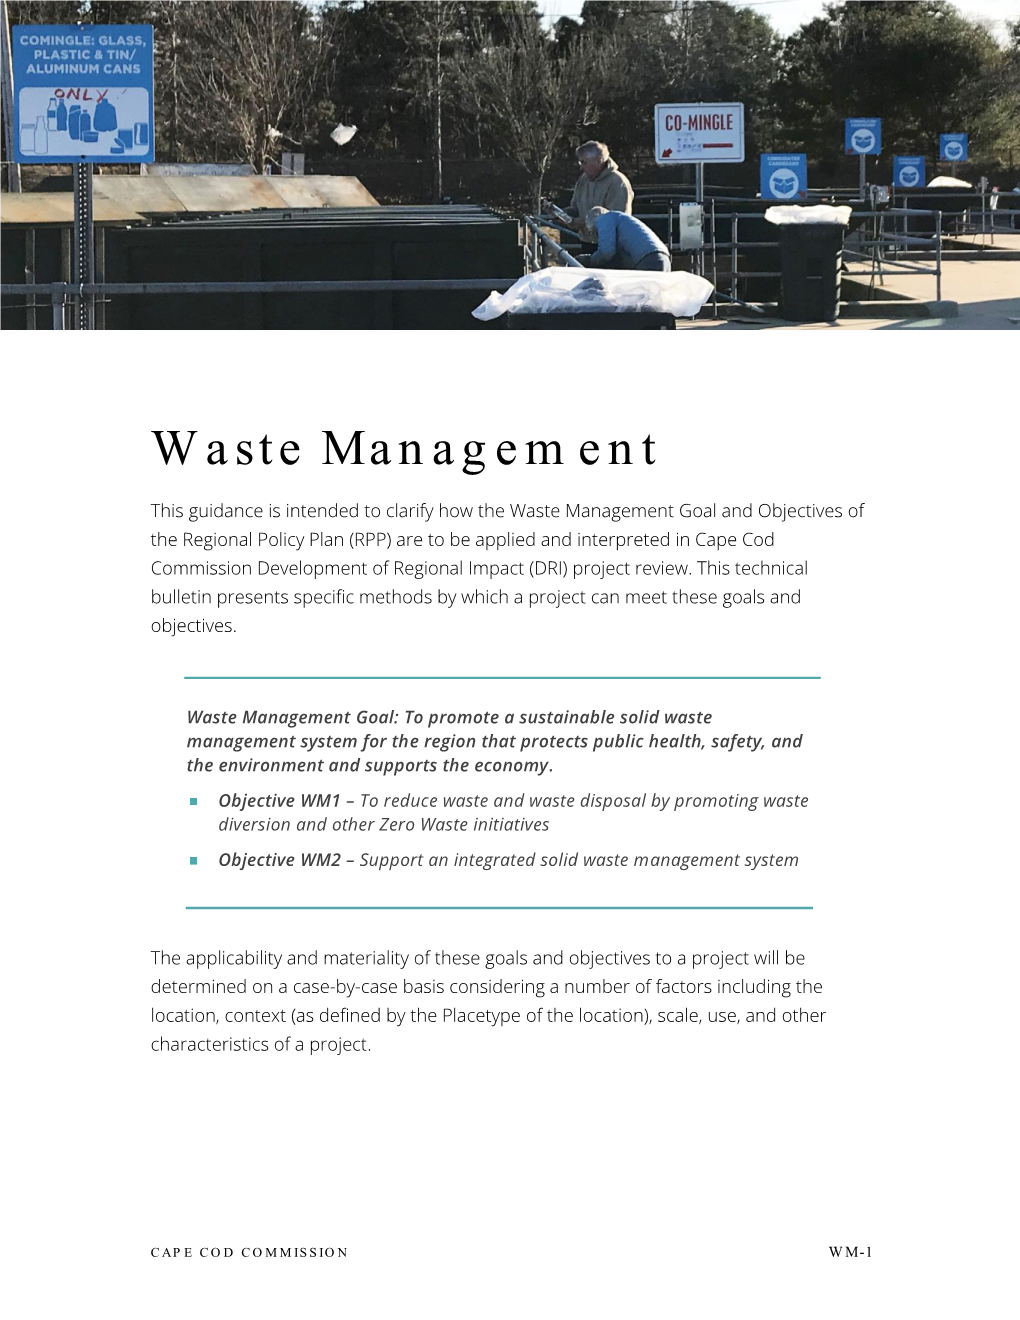 Waste Management Technical Bulletin